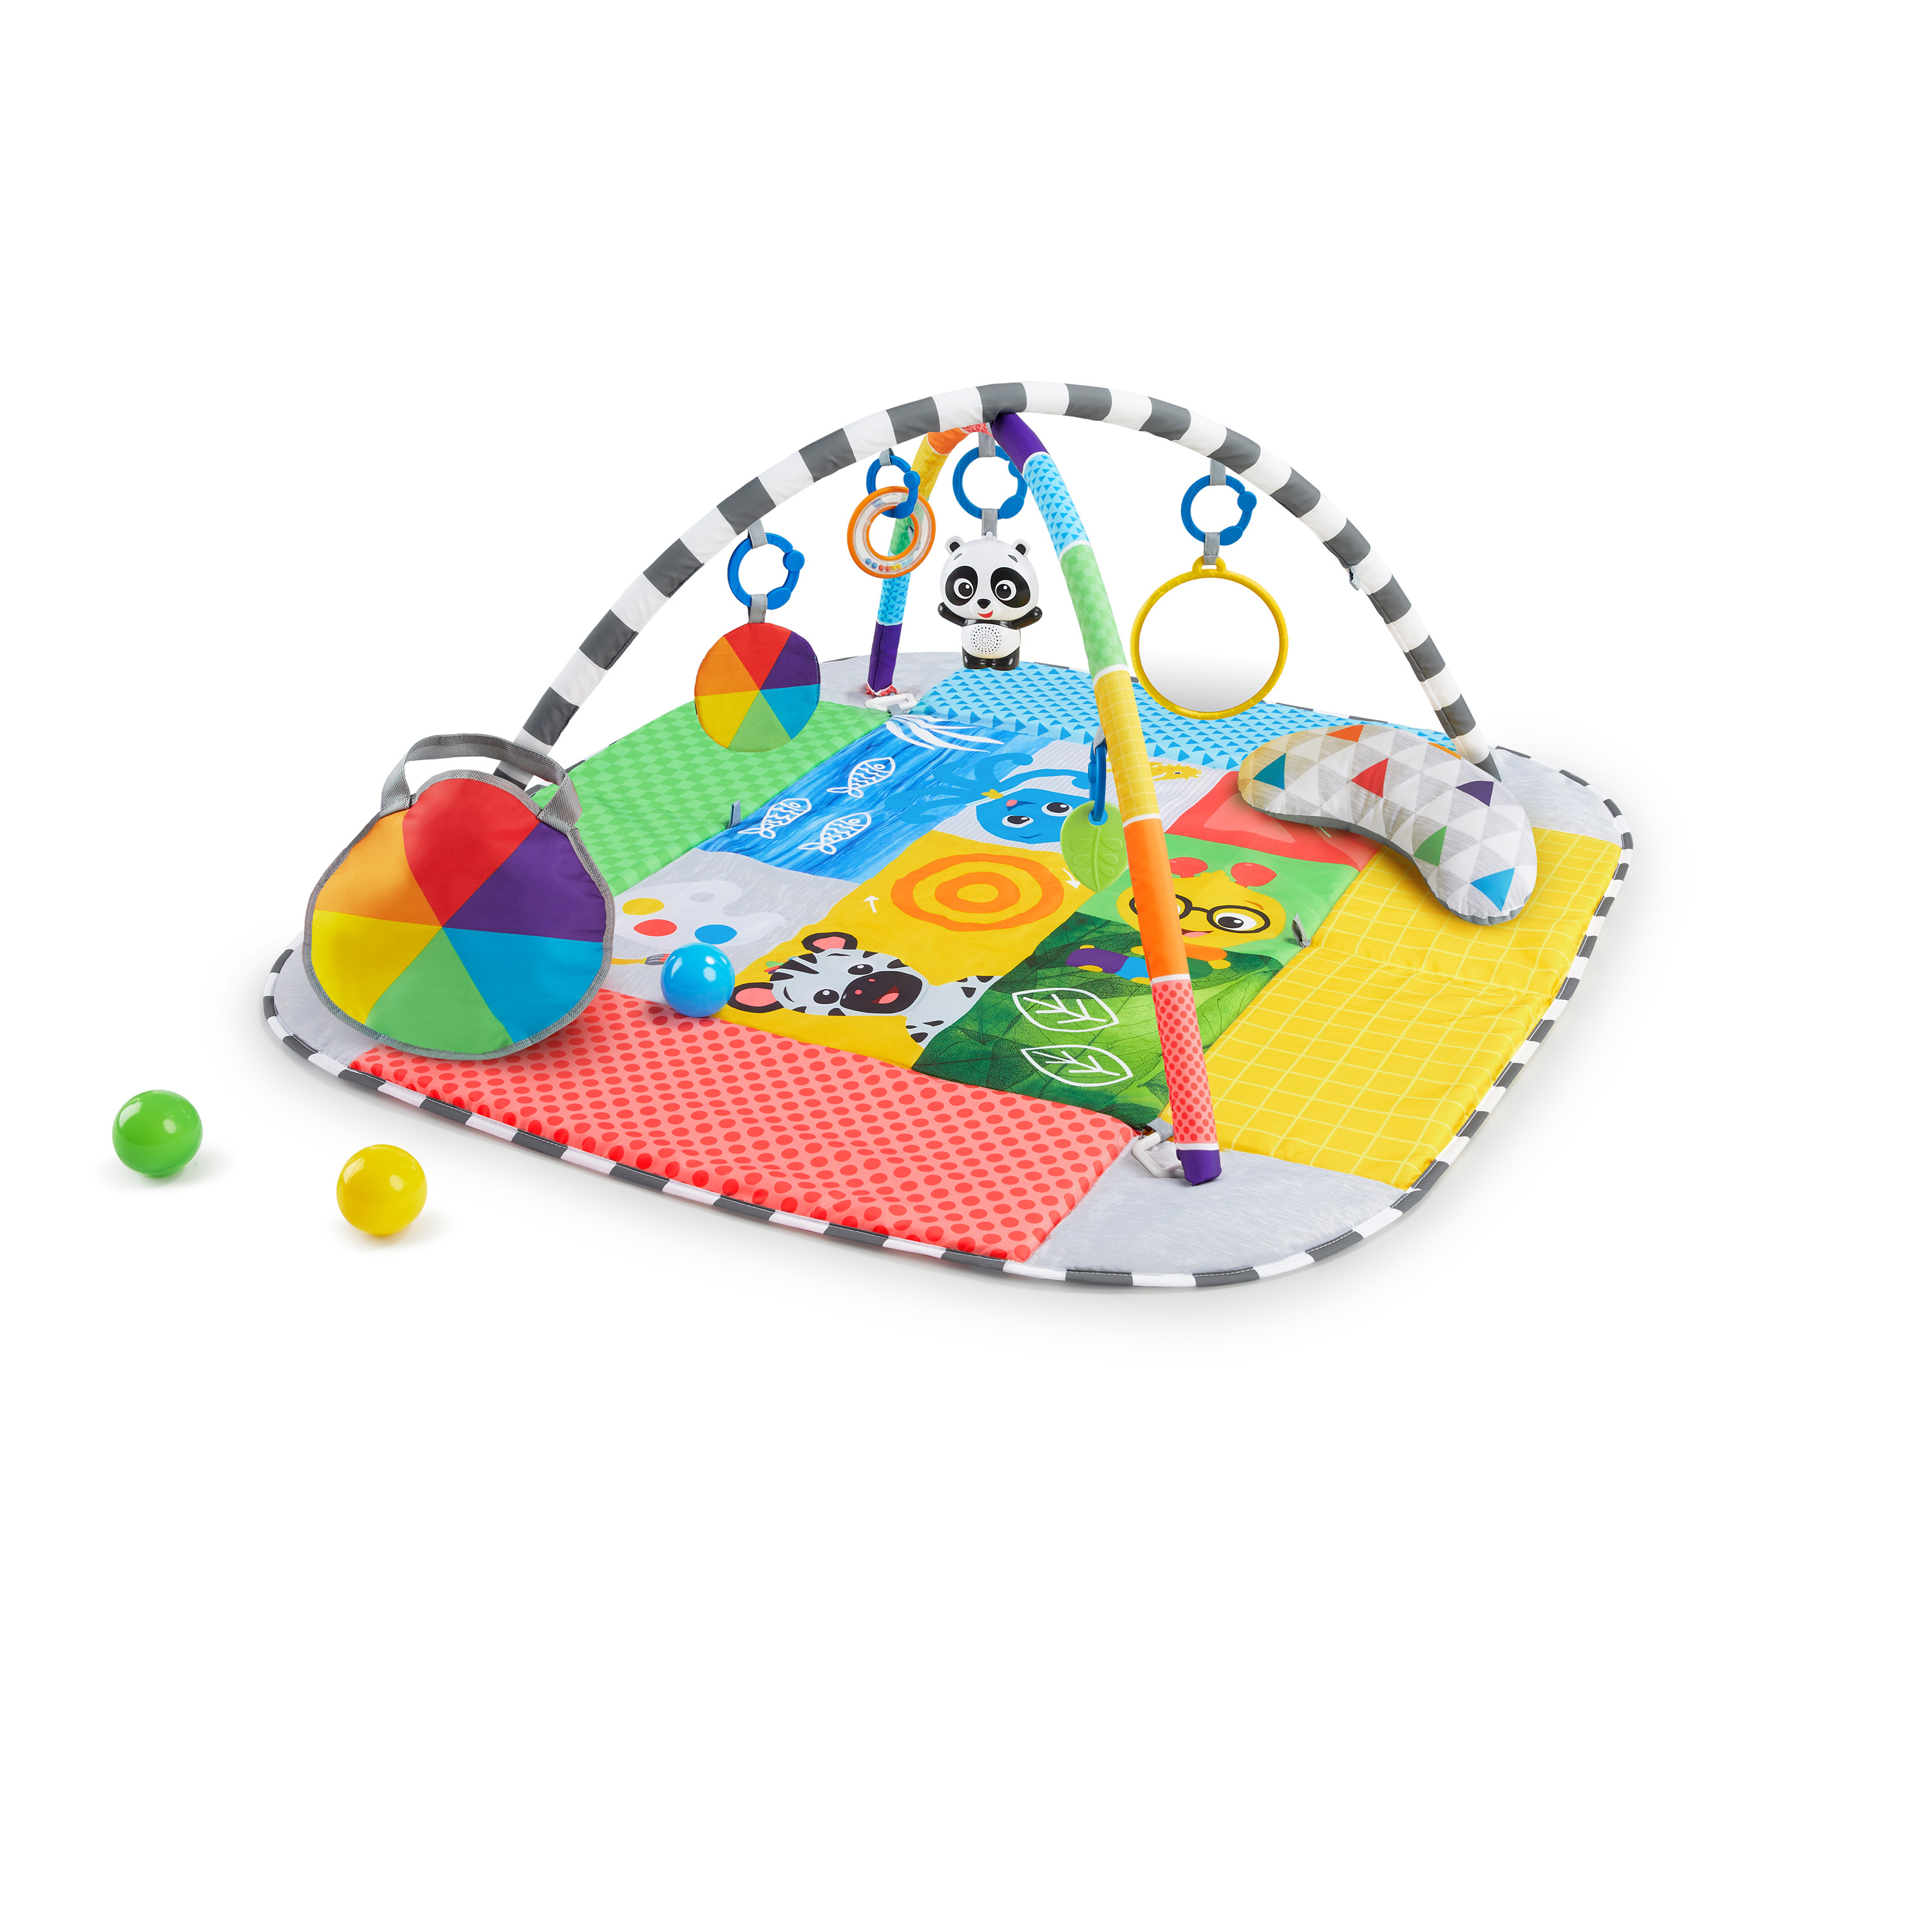 Achat Tapis d'éveil 5-en-1 Color Playspace™ de Baby Einstein : Aubert